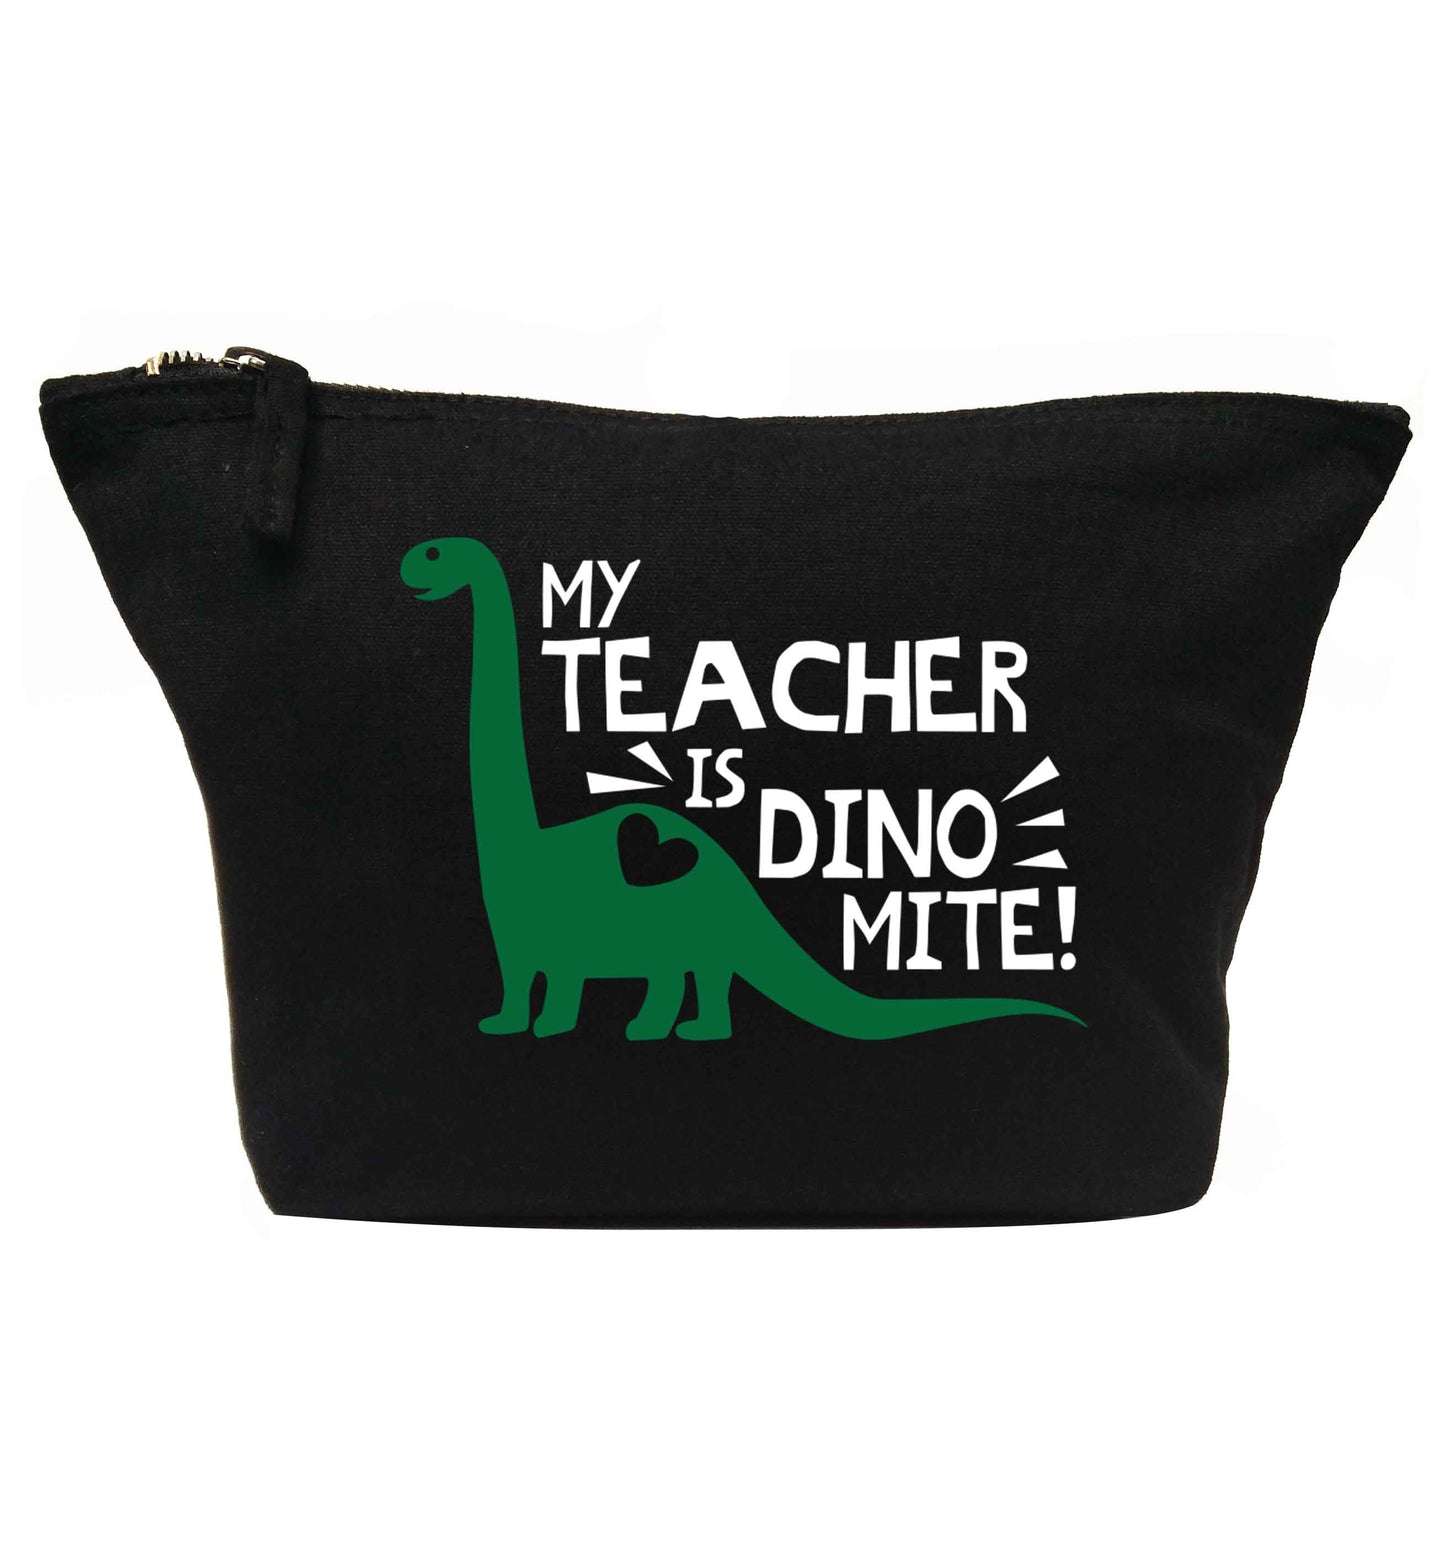 My teacher is dinomite! | makeup / wash bag